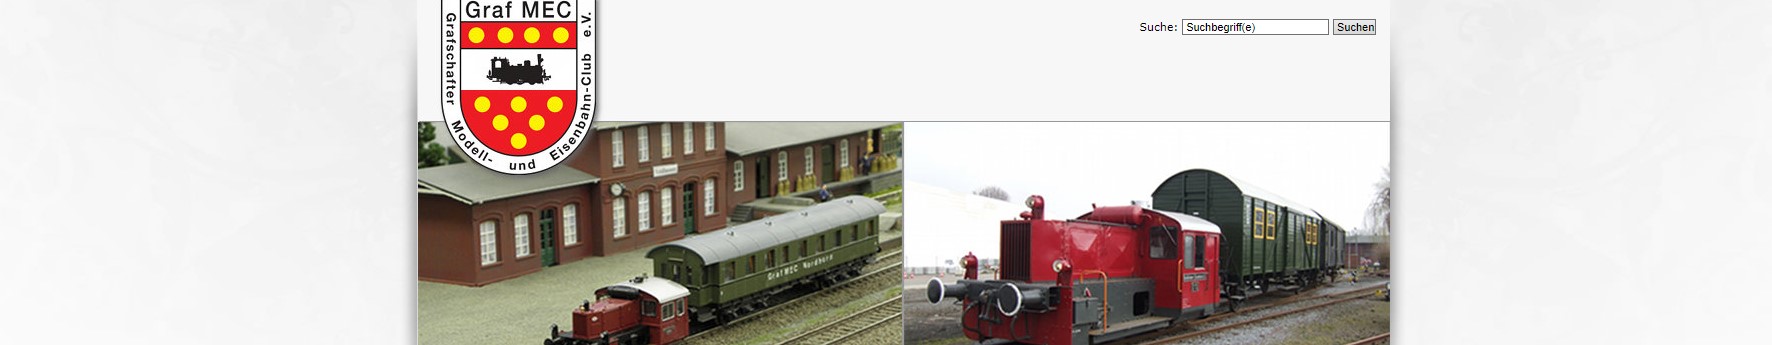 Grafschafter Modell- und Eisenbahn-Club e.V. (Graf MEC e.V.) – Nordhorn 48529